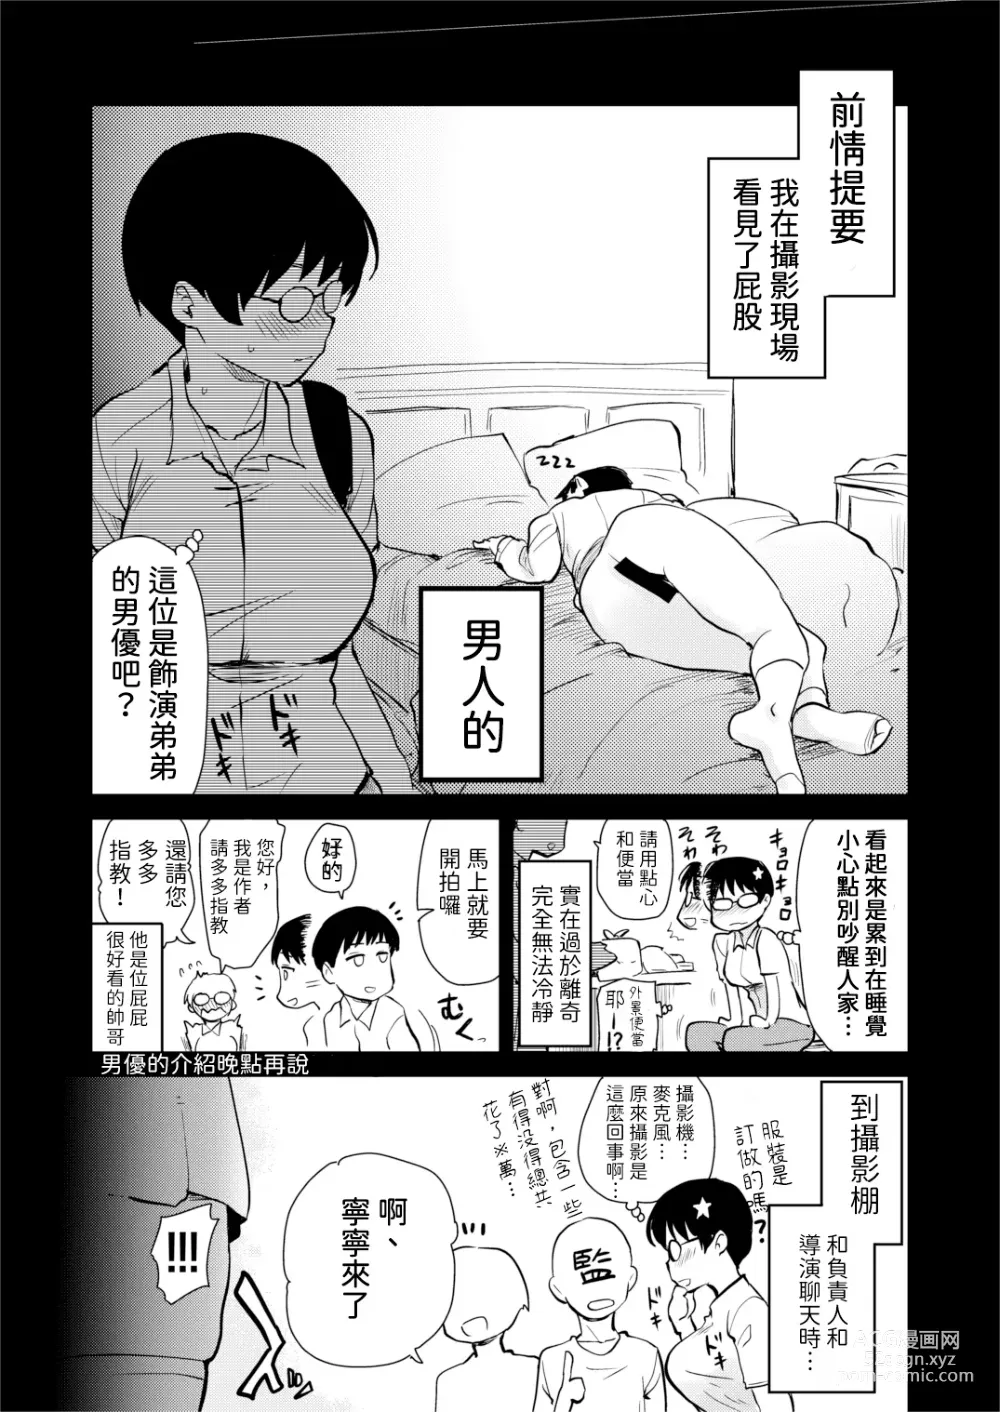 Page 13 of doujinshi 我畫的色情漫畫被AV真人化了!? 因為機會難得所以去拍攝現場觀摩之後的心得感想